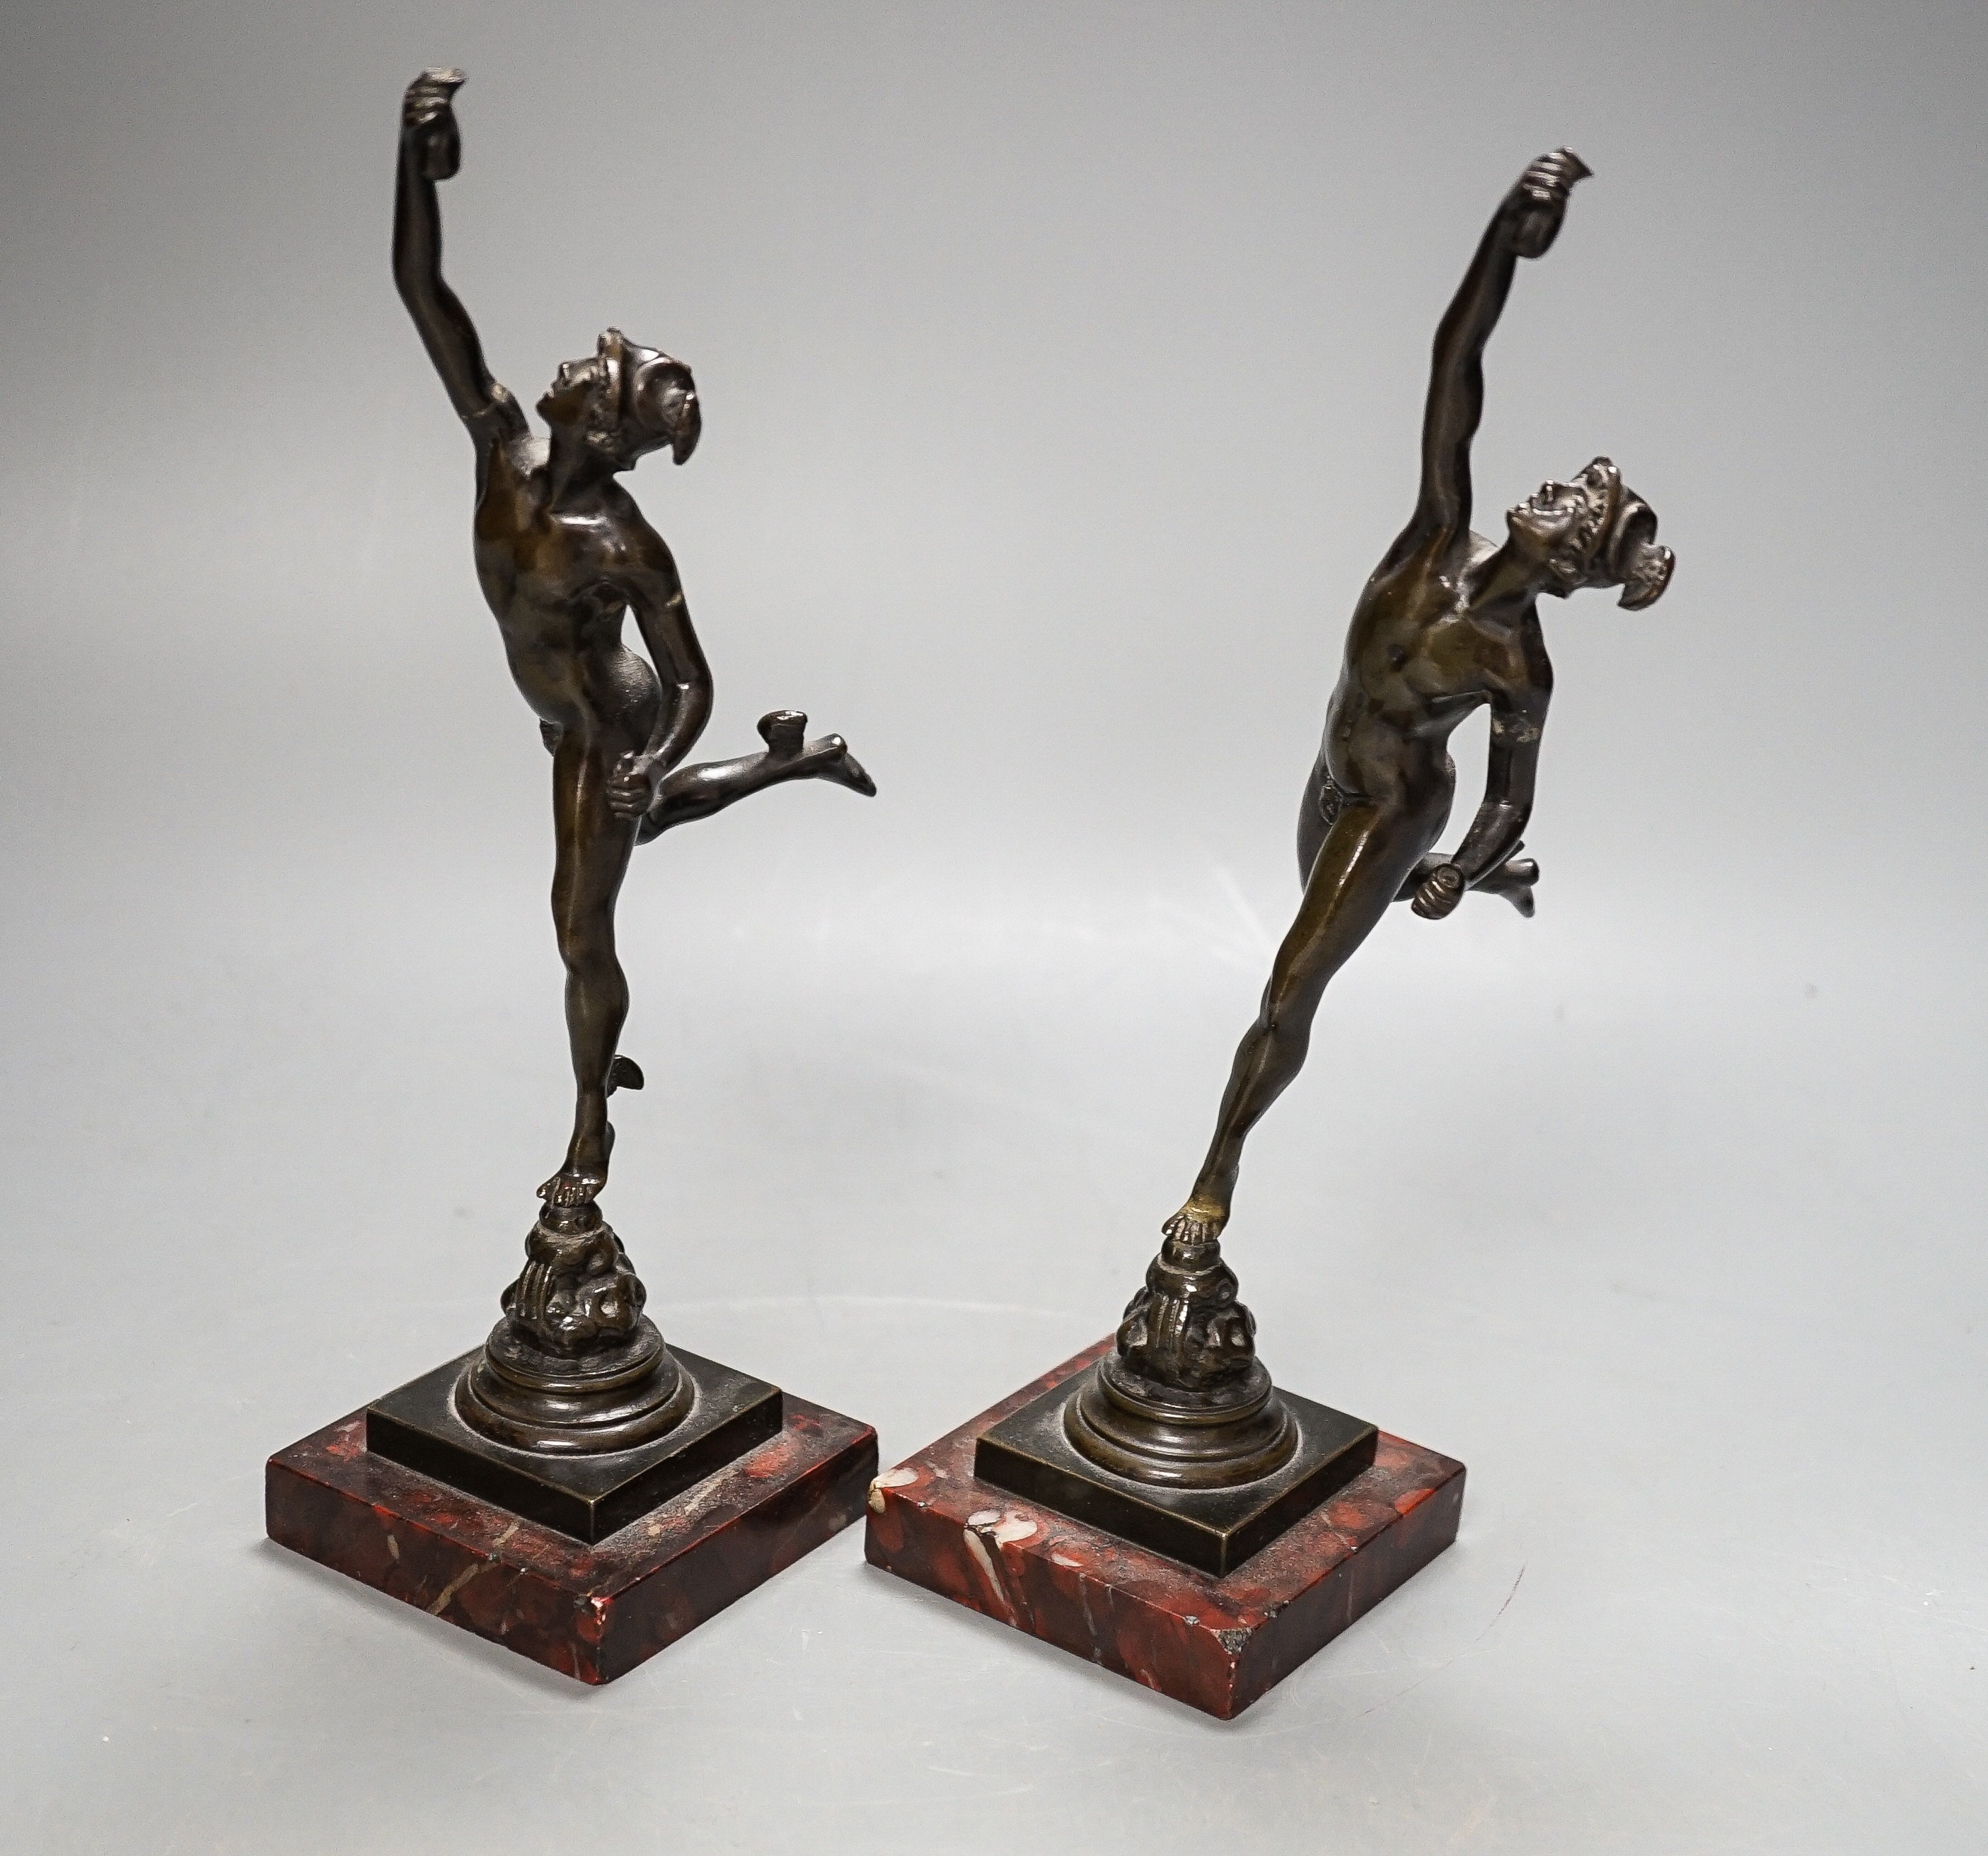 Two 19th century Grand Tour souvenir bronze figures of Mercury, 23 cms high.